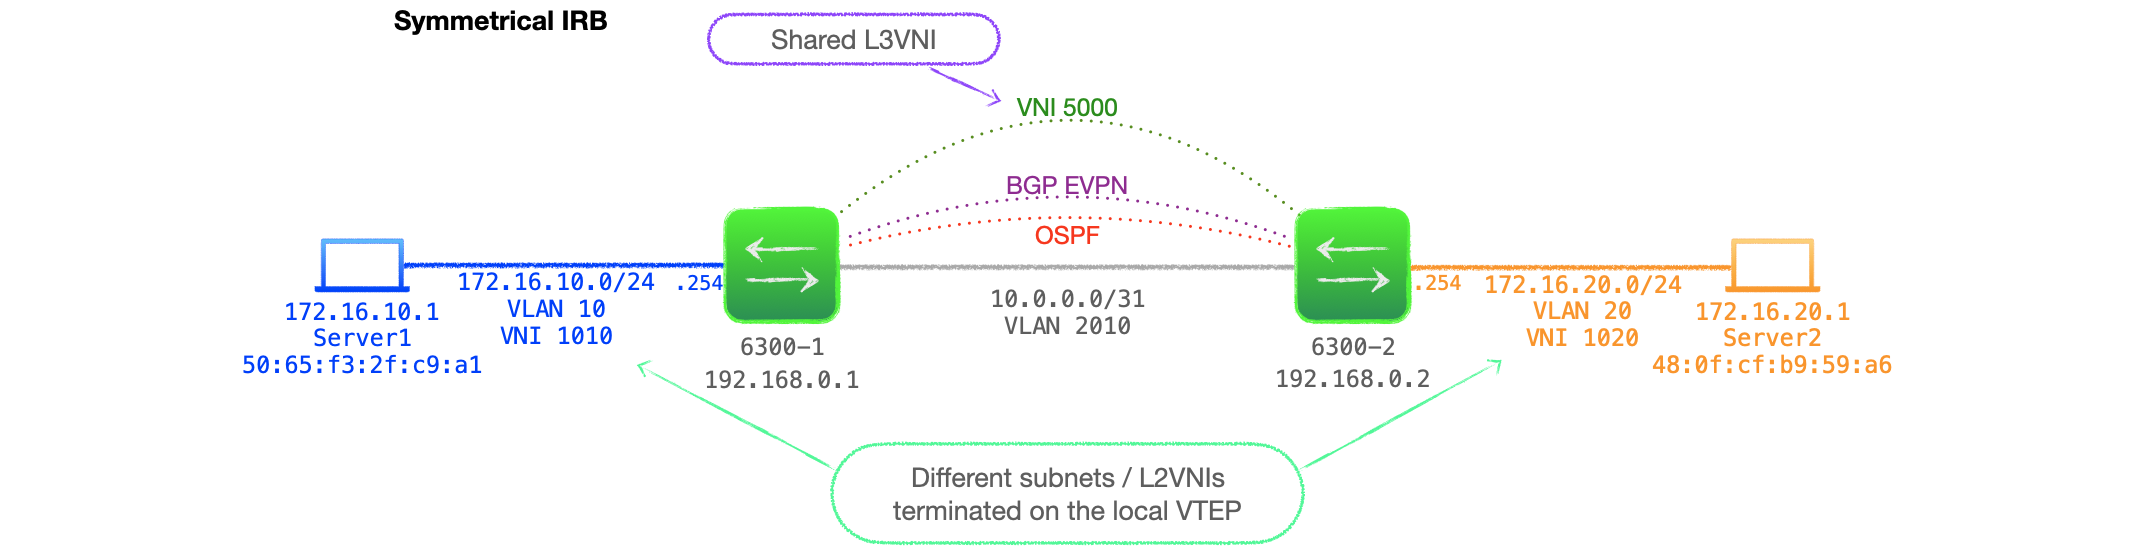 EVPN-VXLAN Explainer 6 - Symmetrical IRB